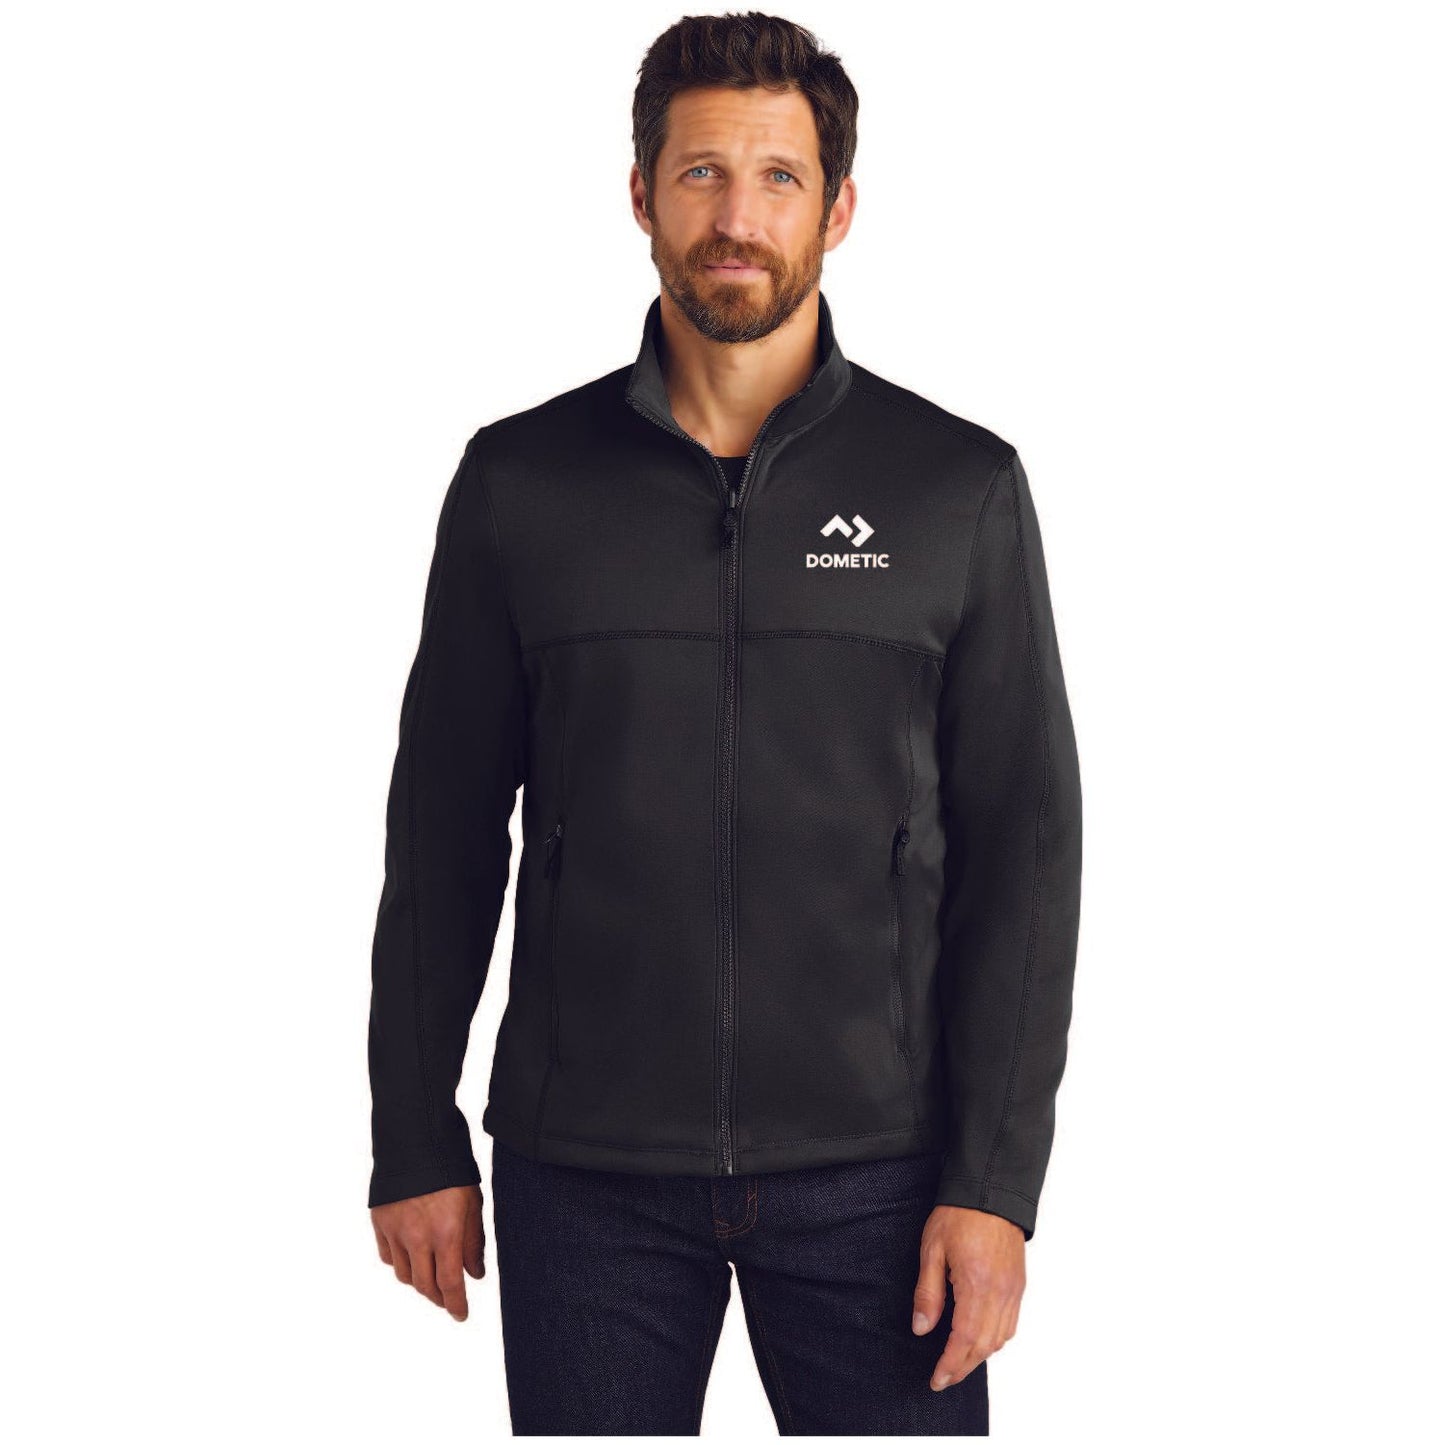 Port Authority ® Collective Smooth Fleece Jacket - F904